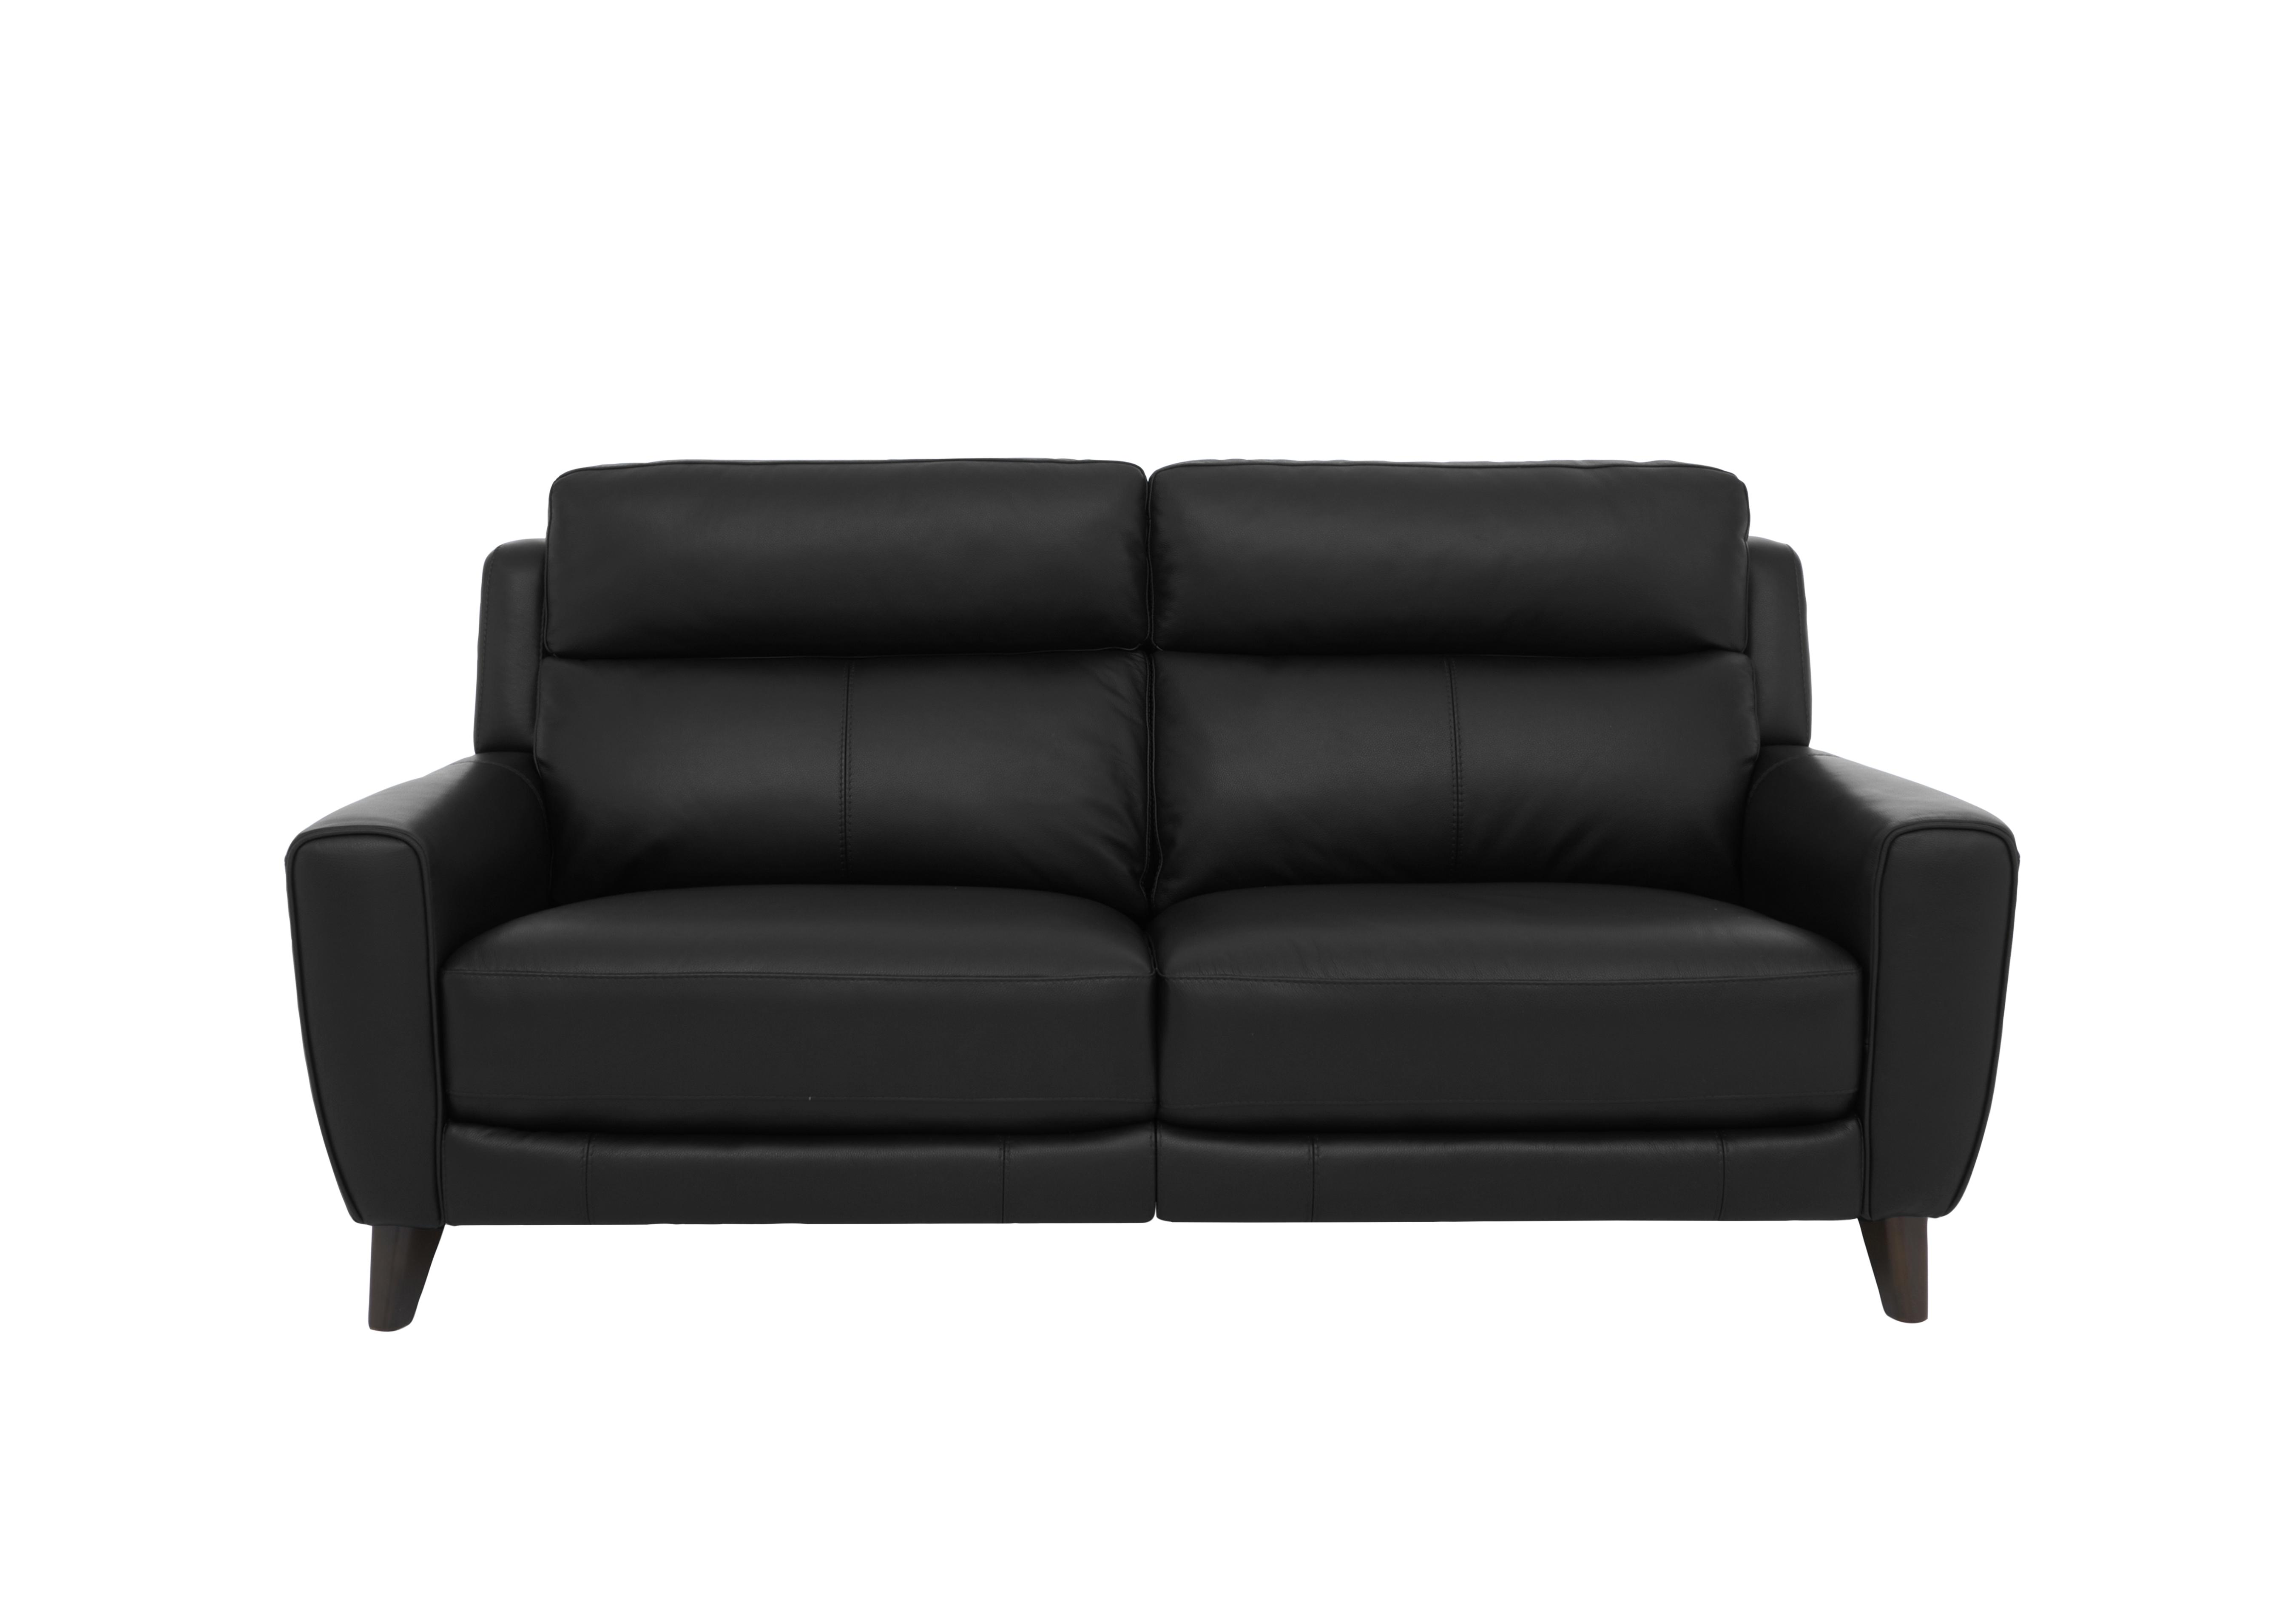 Zen 3 Seater Leather Sofa in Bx-023c Black on Furniture Village